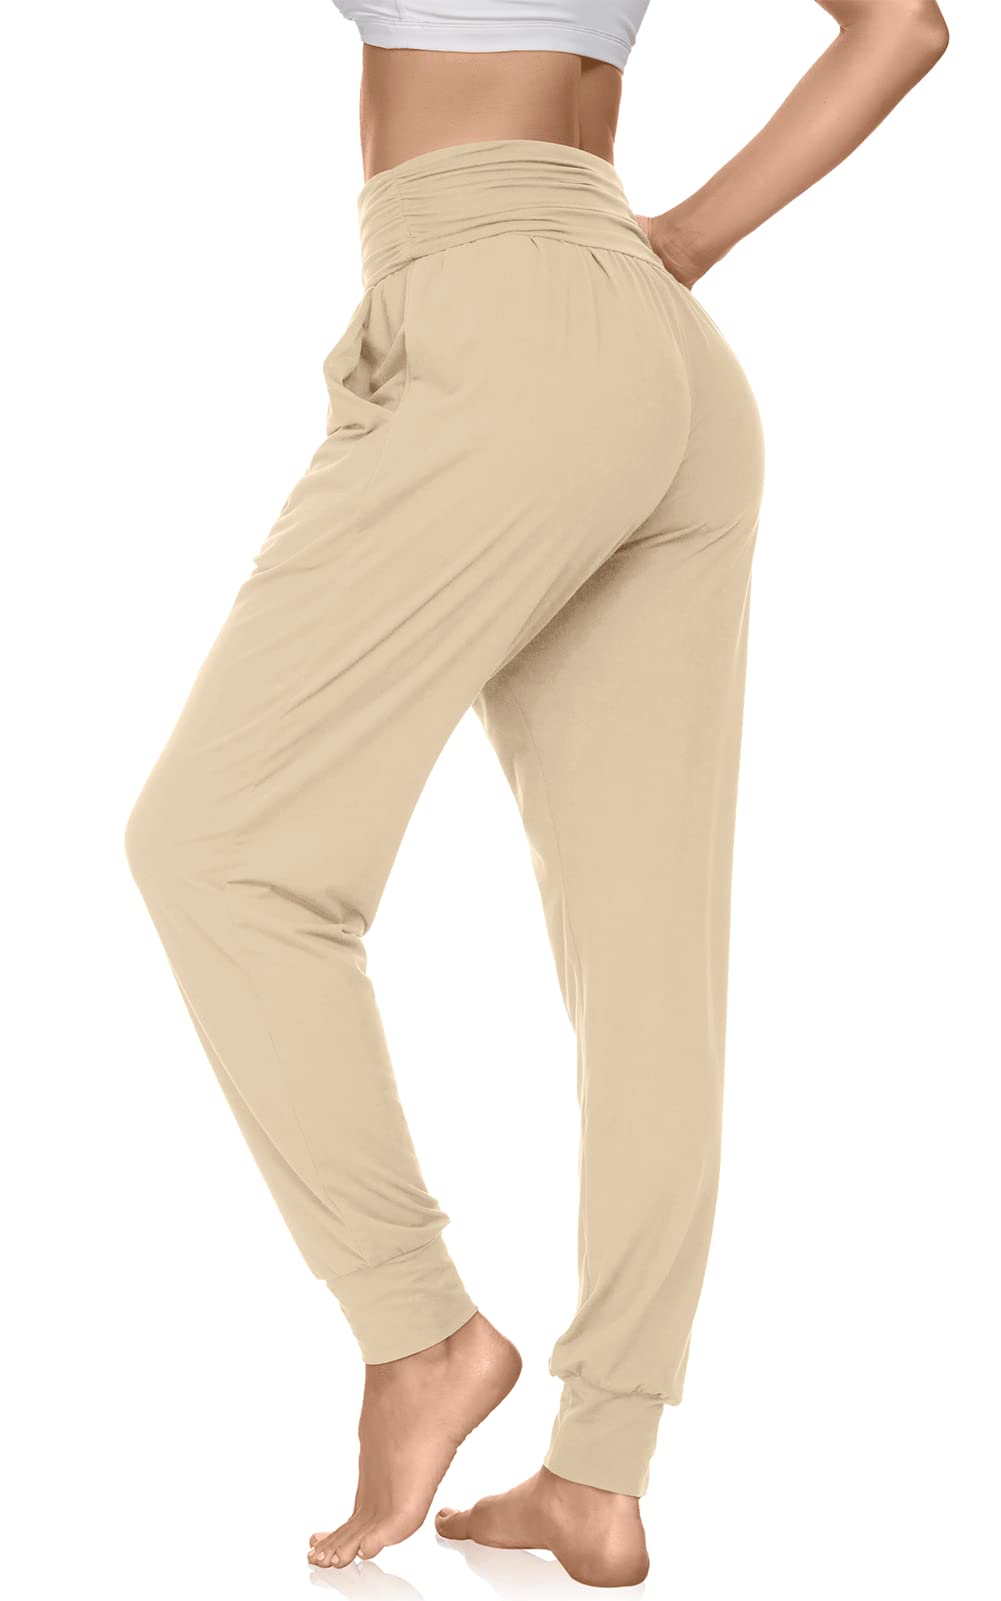 UEU Women's Cozy Yoga Joggers Pants Loose Workout Sweatpants Comfy Lounge Pants with Pockets